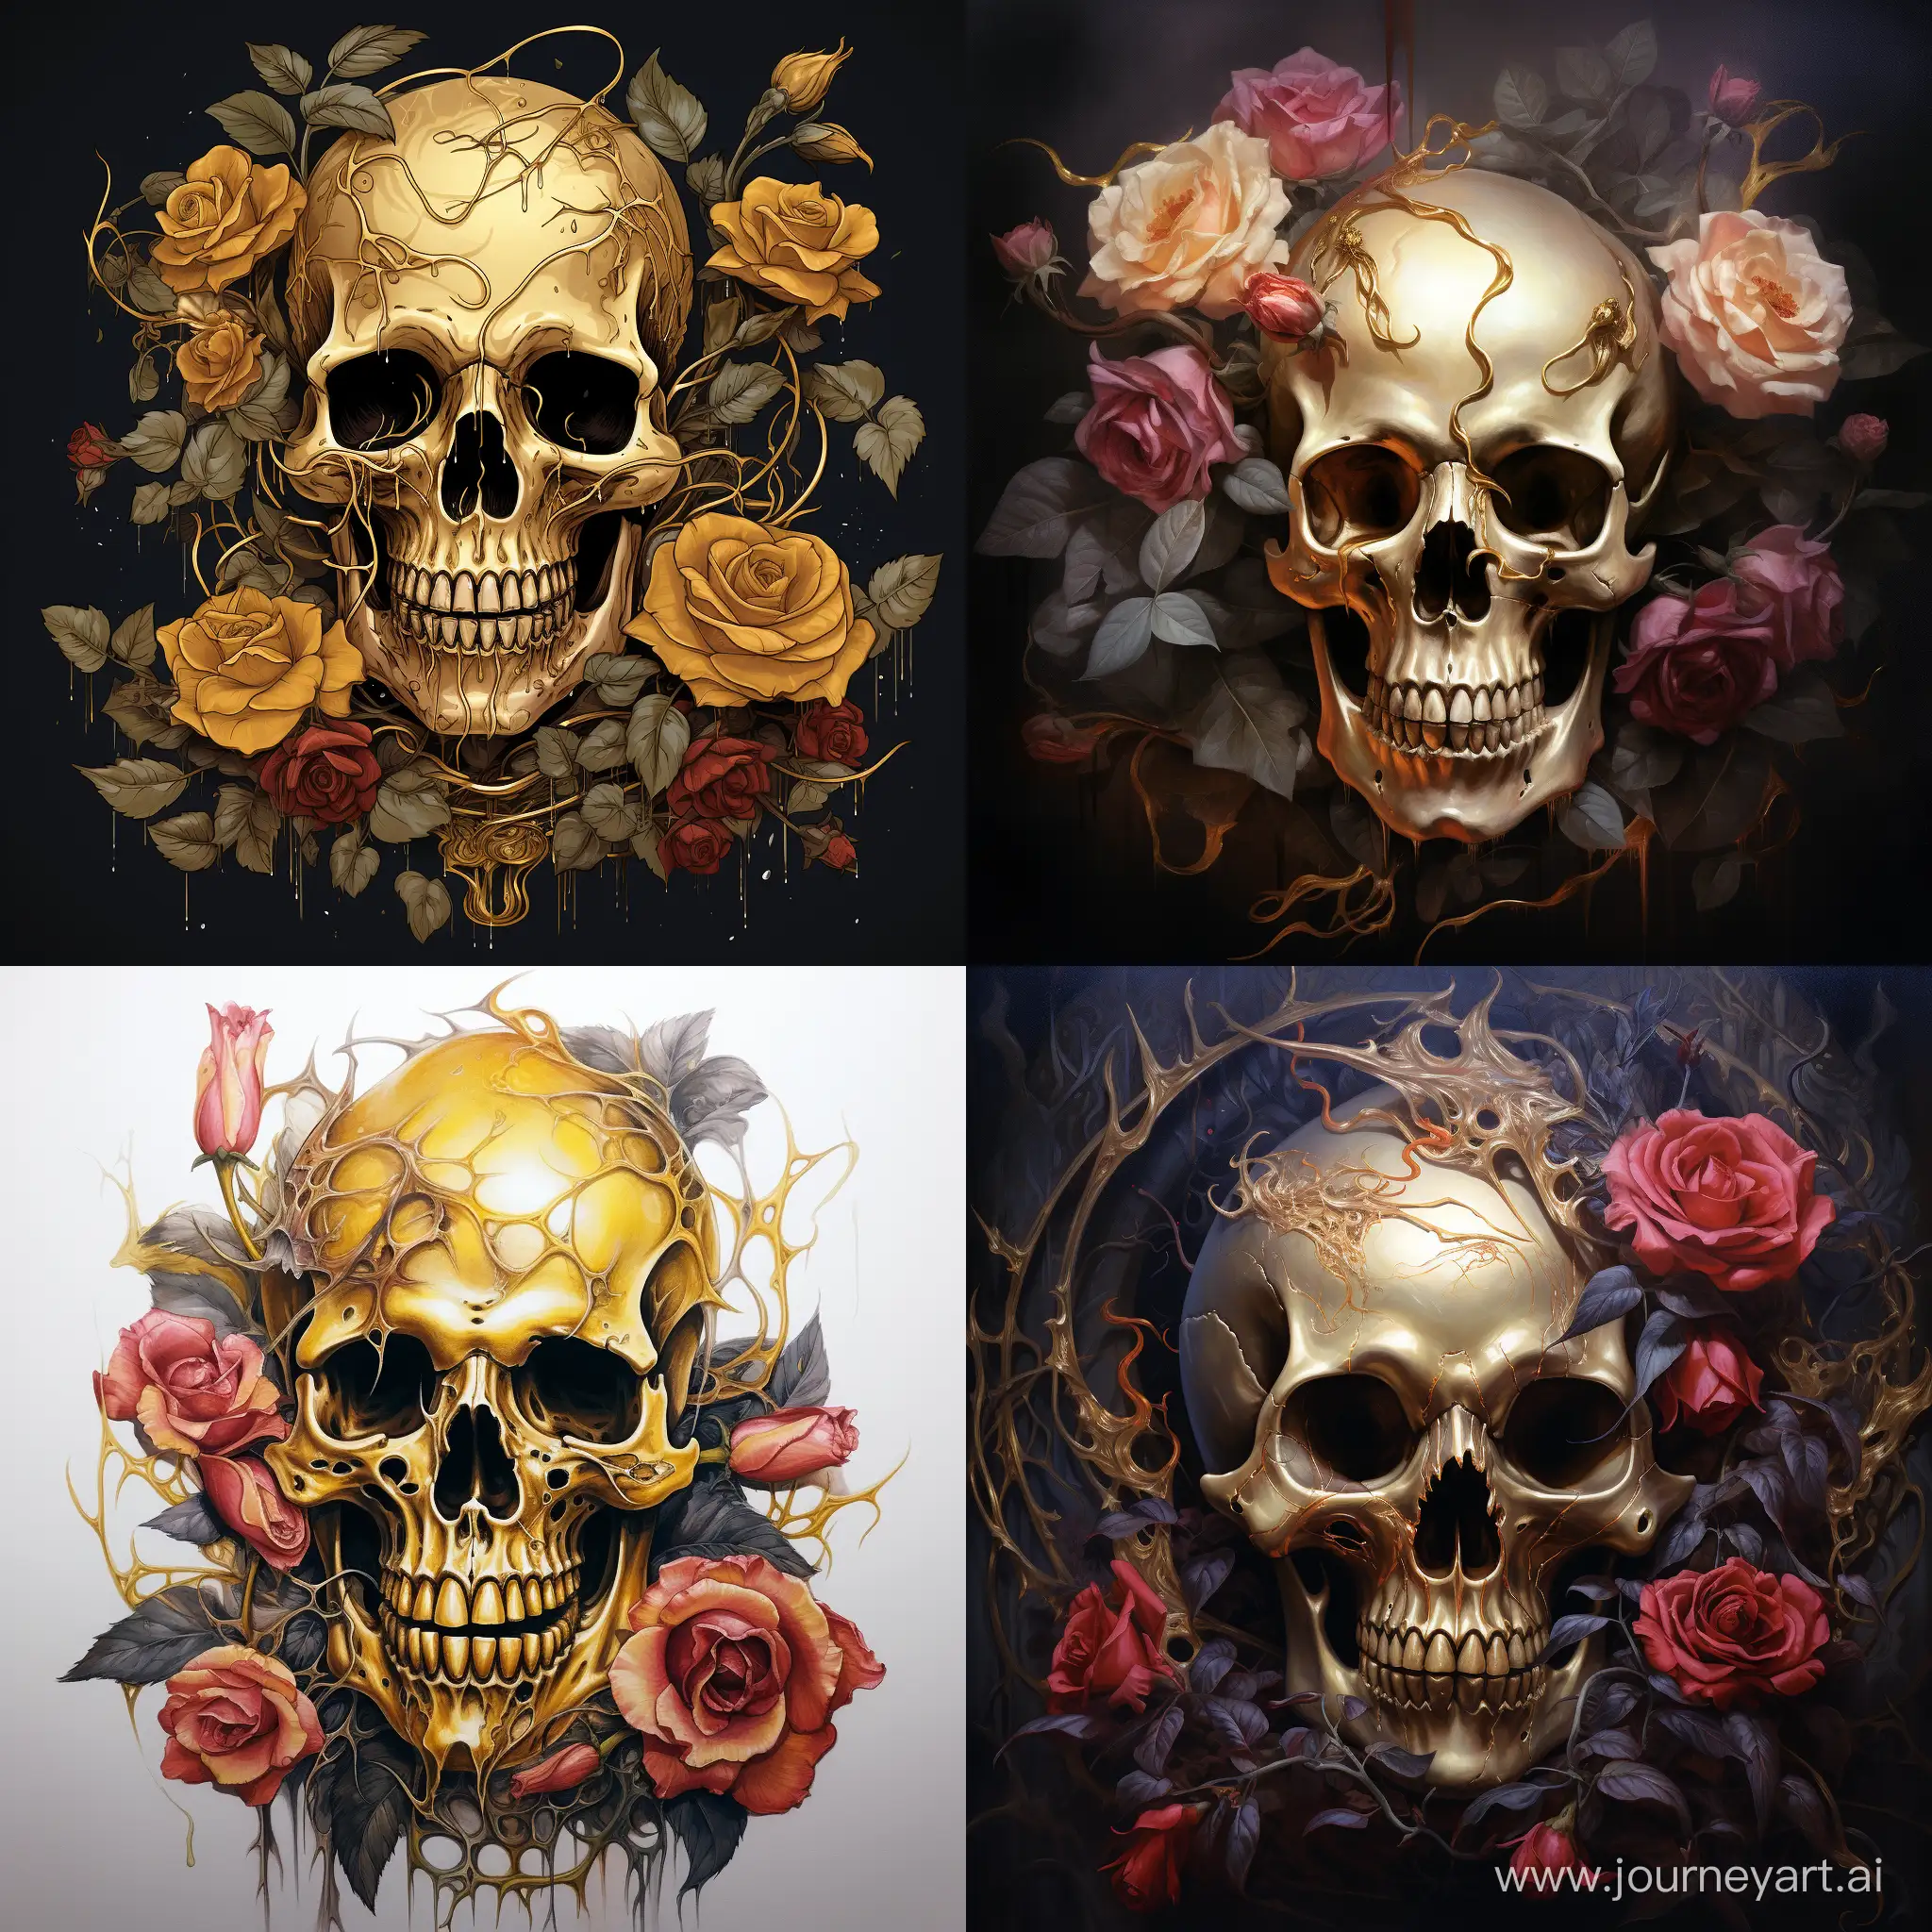 Golden-Skull-and-Rose-Intricate-Metallic-Still-Life-Art